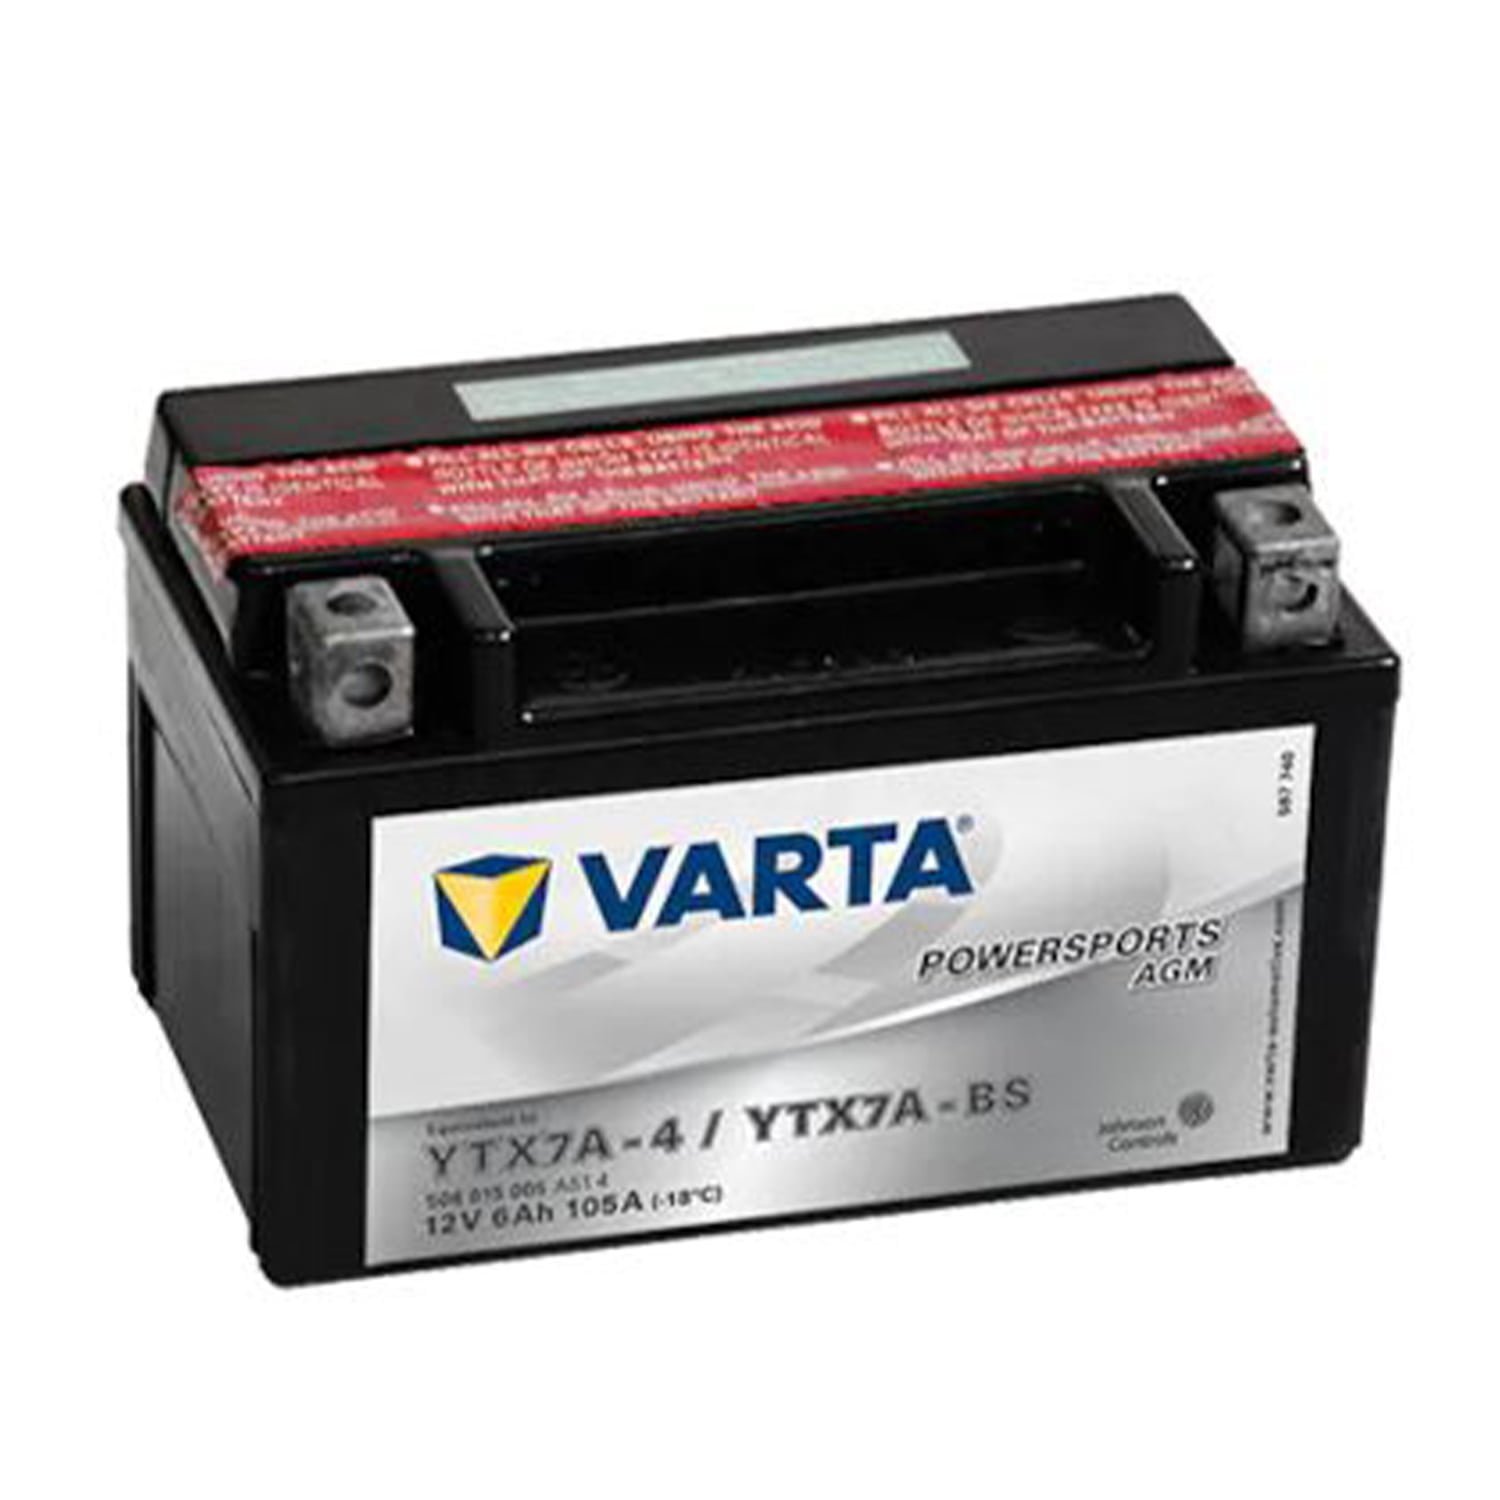 Купить будет аккумулятор. 508012008 Varta. Varta Powersports AGM ytx7a-BS. Varta 6 Ah 12v ytx7a-4 (fa) Powersports AGM. Varta Powersports AGM.